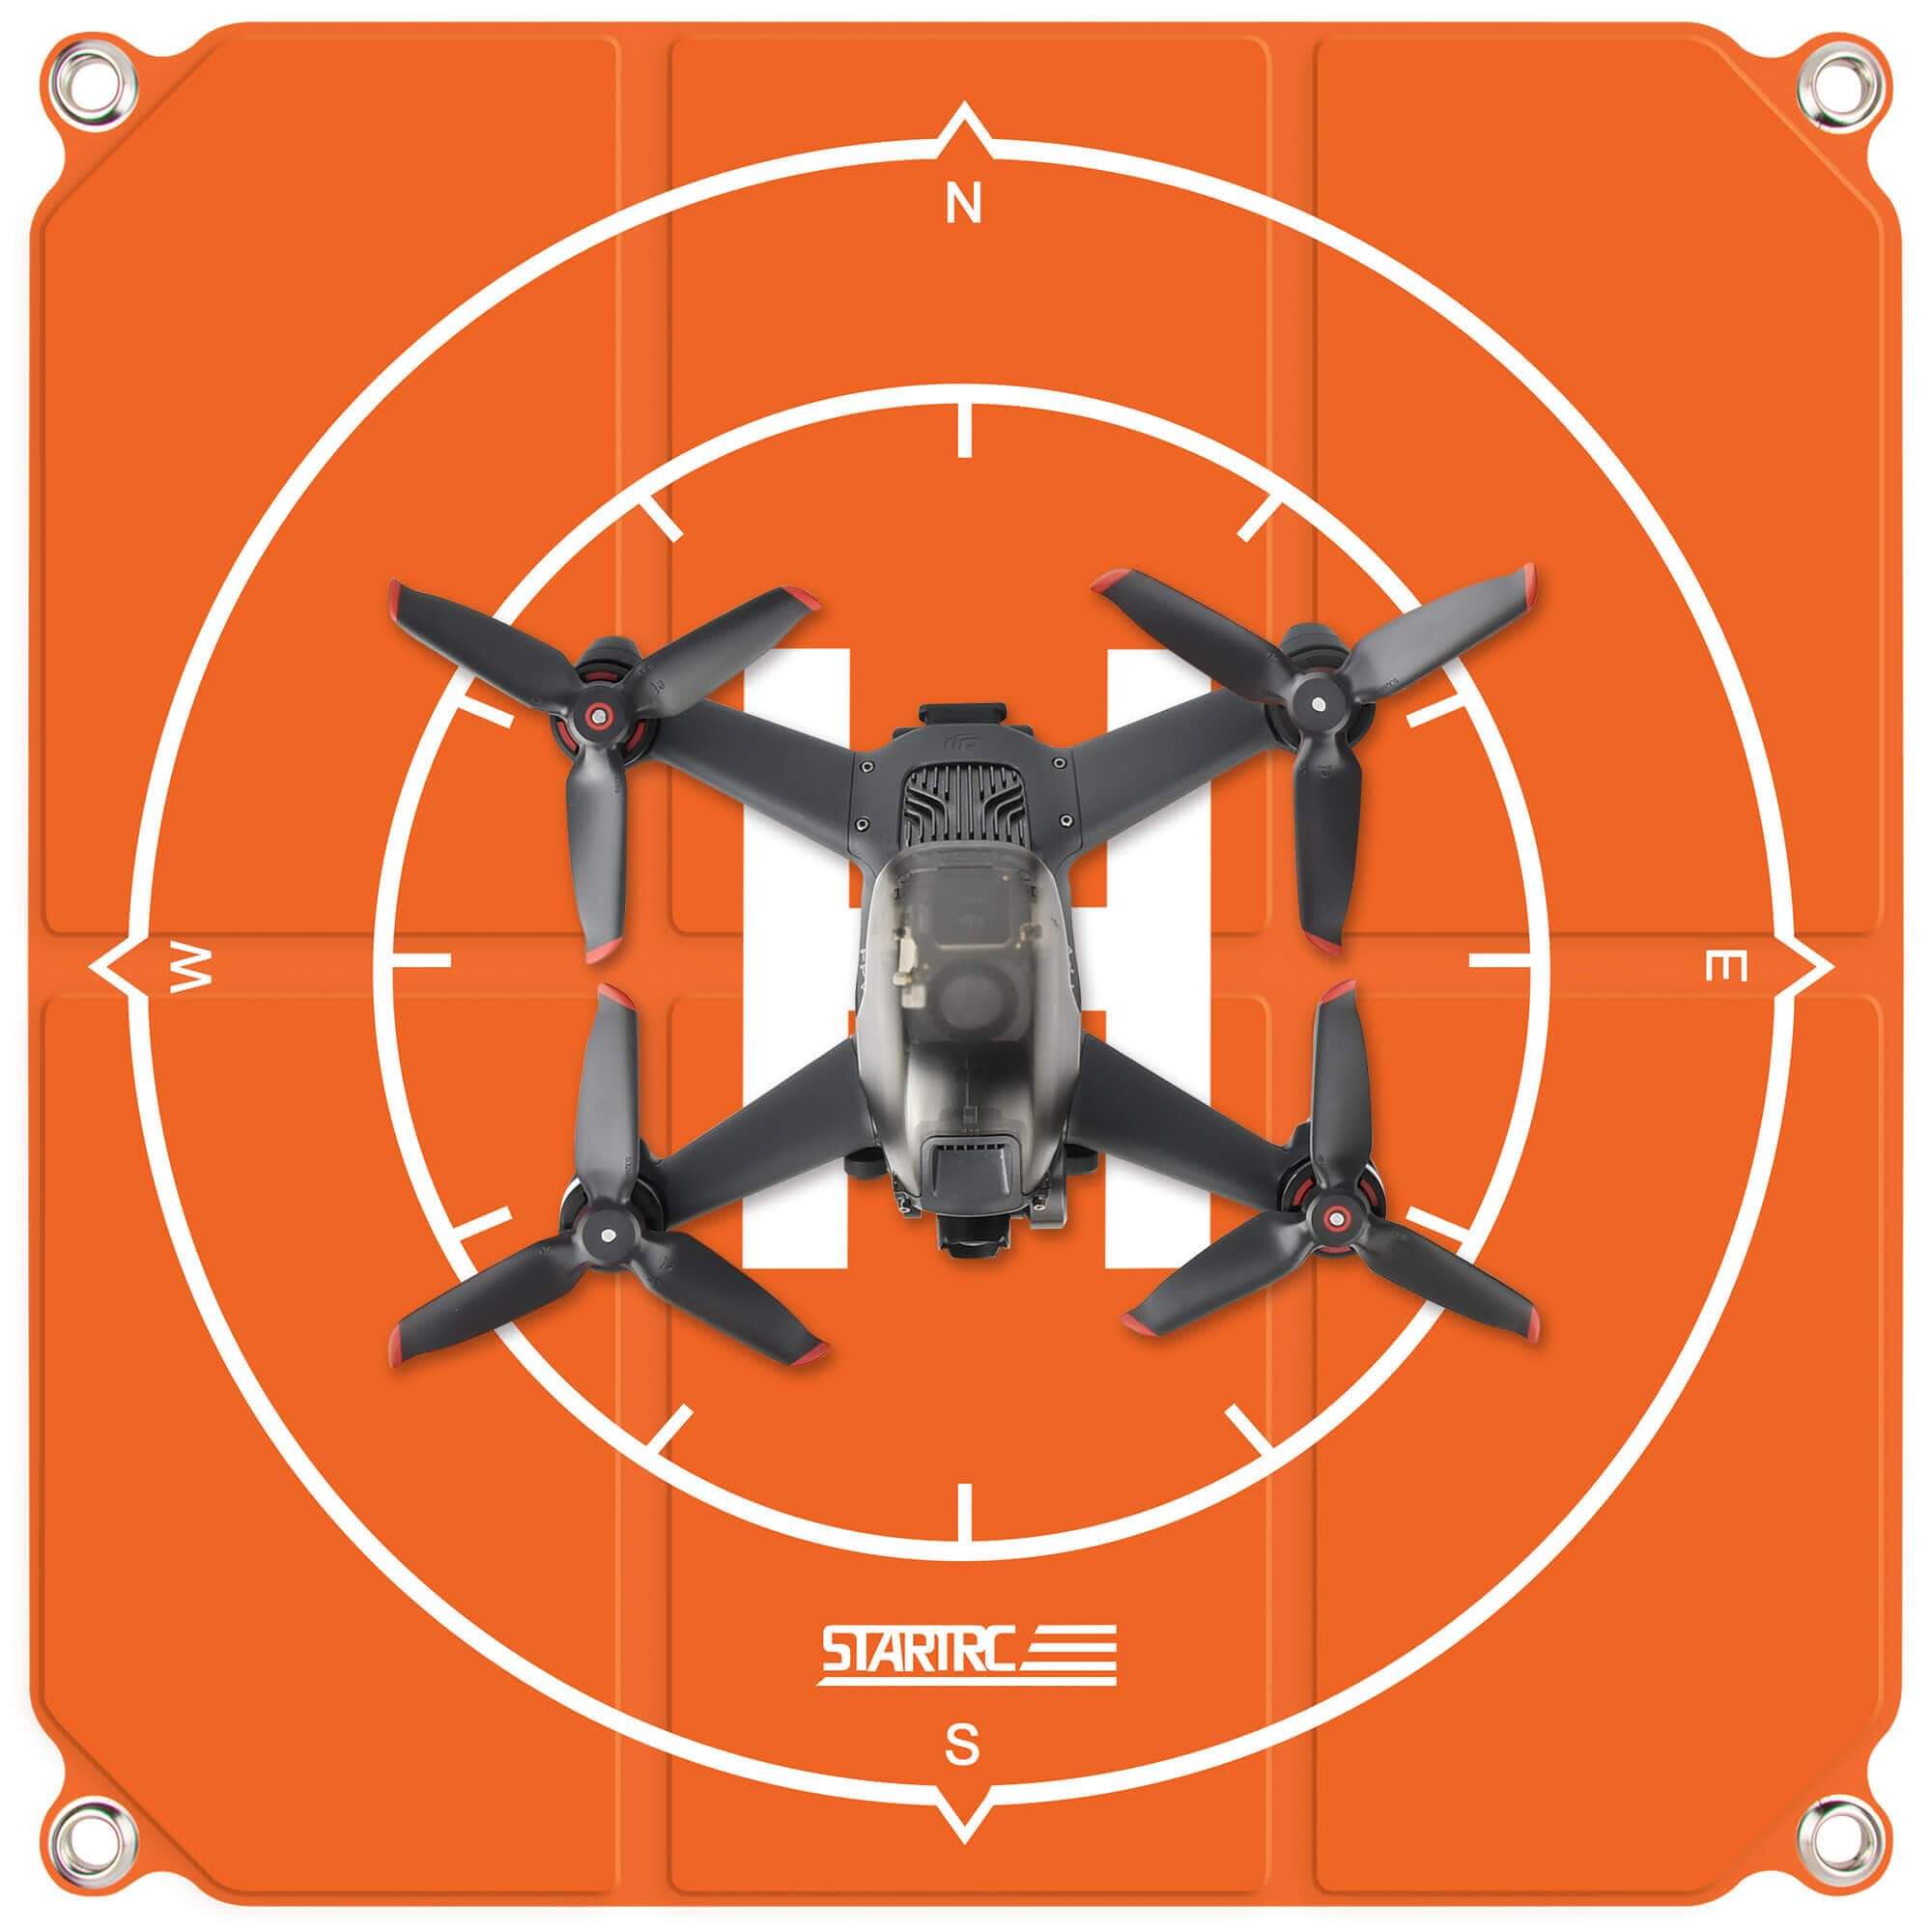 Drone landing pad - Torvol